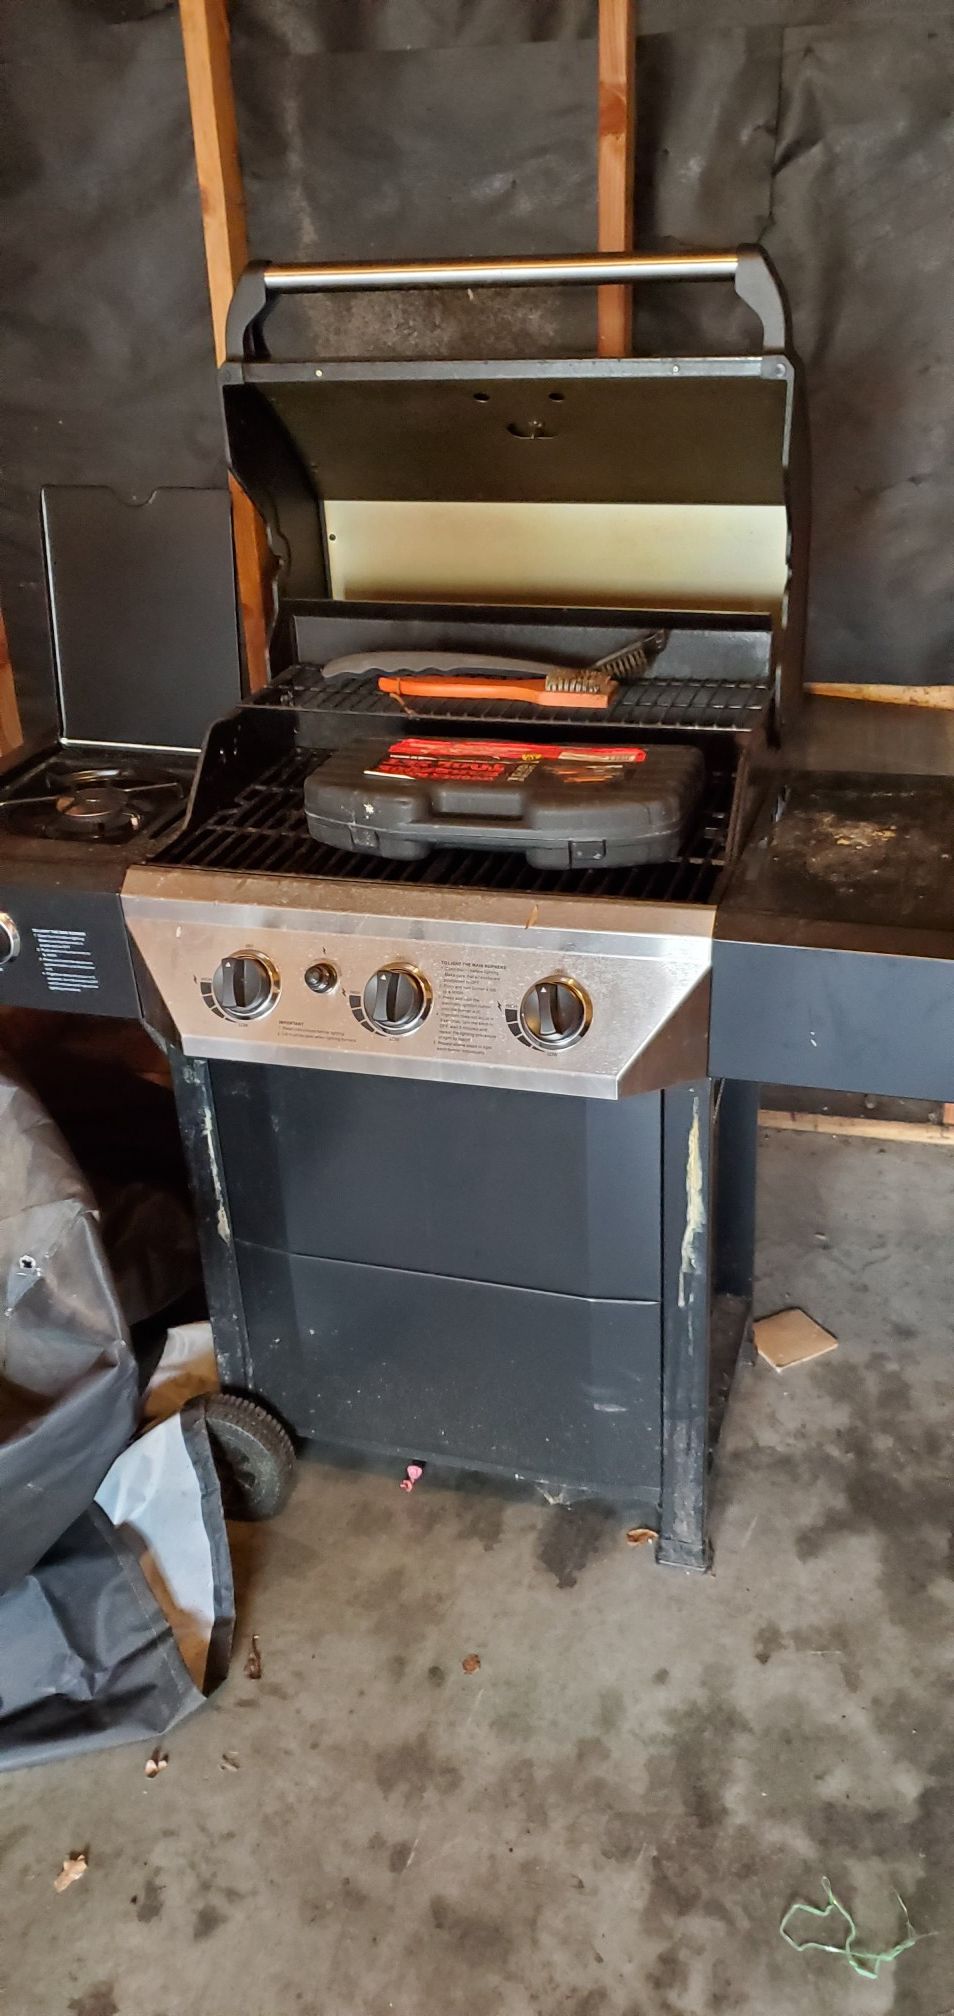 Propane grill free